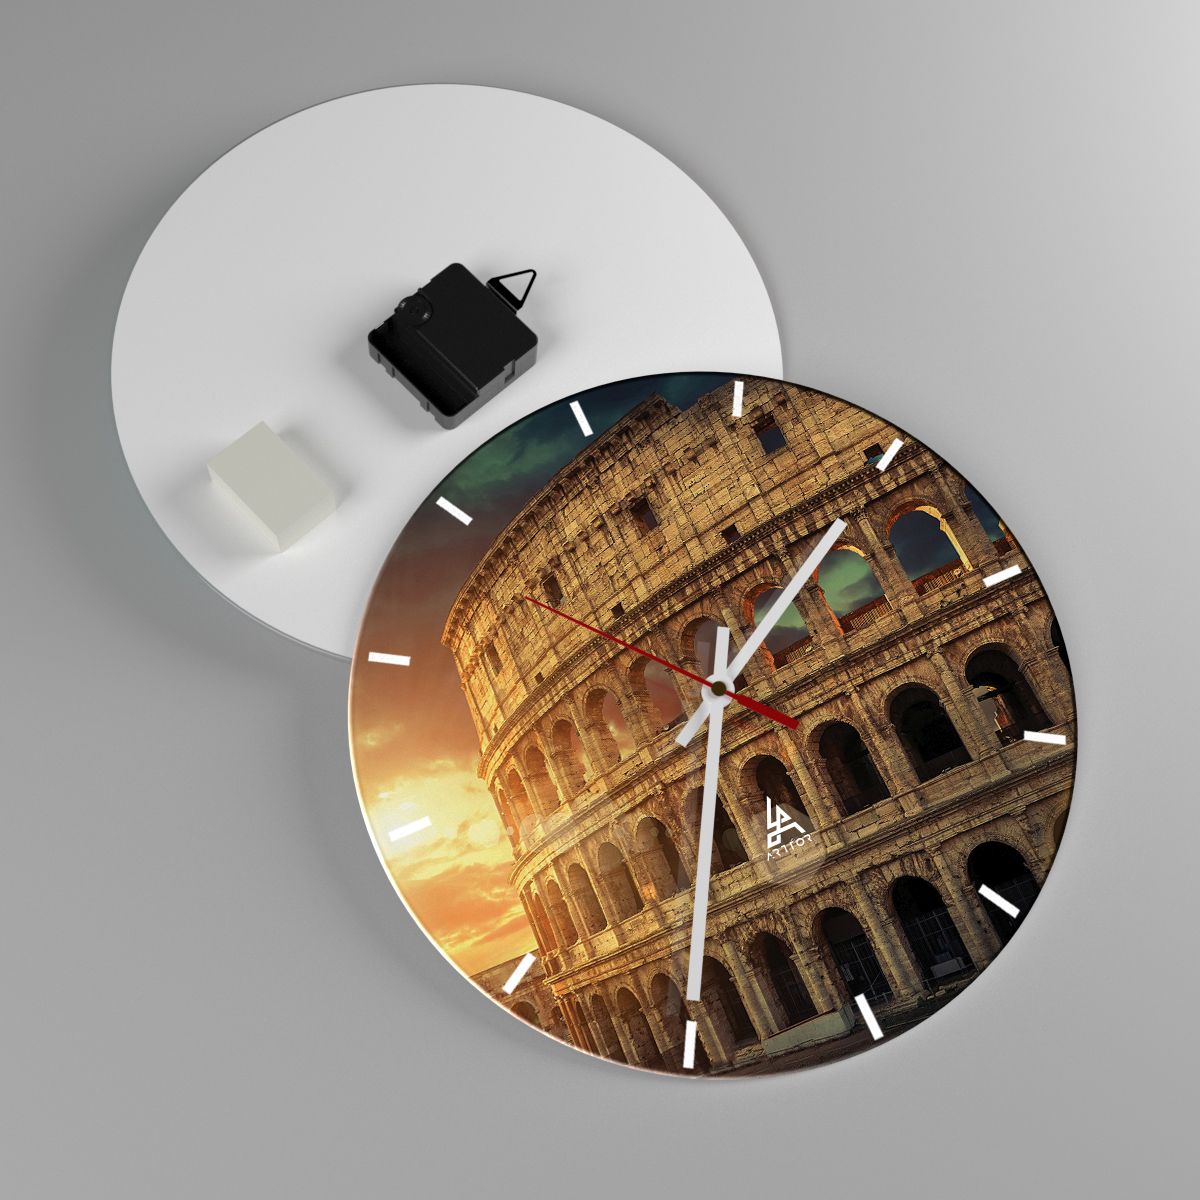 Nástenné hodiny Koloseum, Nástenné hodiny Rím, Nástenné hodiny Architektúra, Nástenné hodiny Taliansko, Nástenné hodiny Kultúra